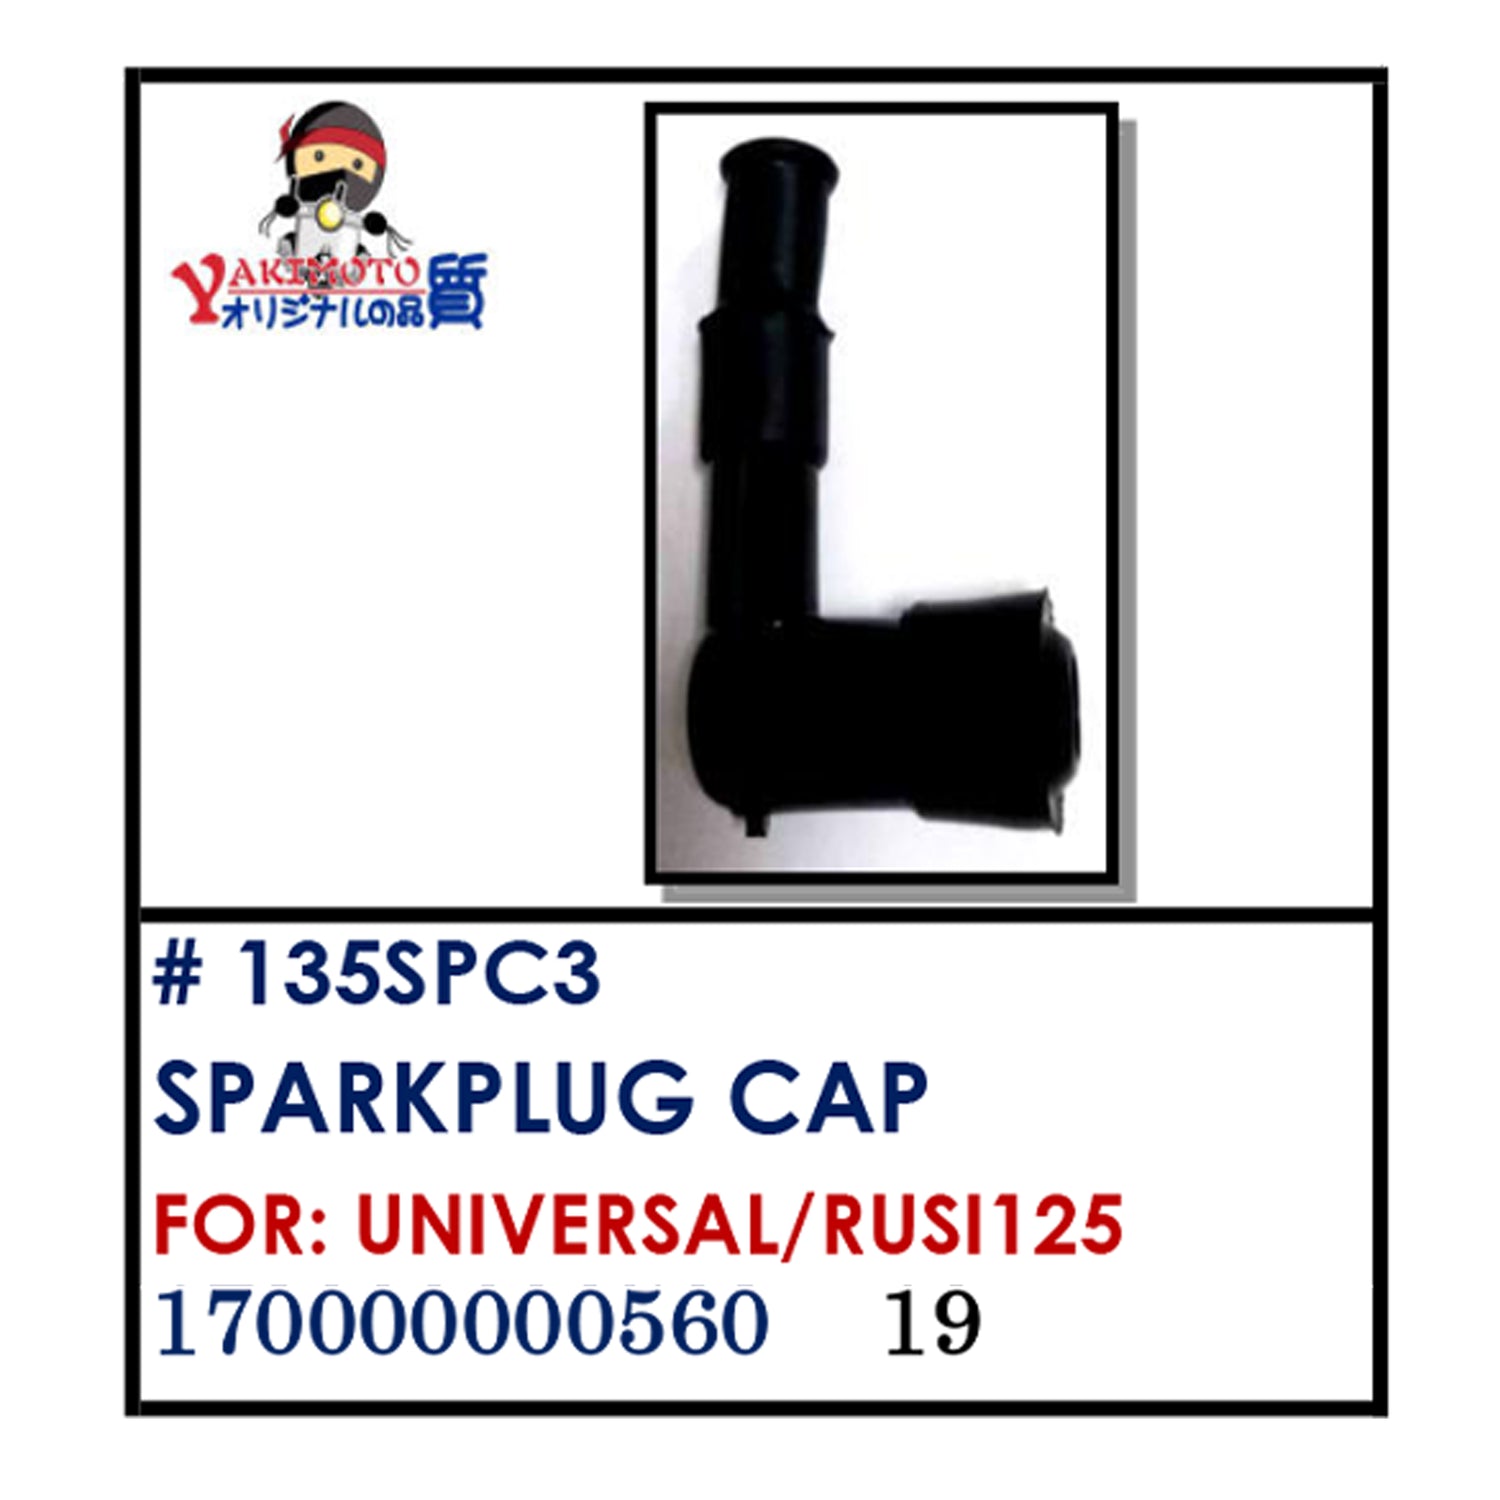 SPARKPLUG CAP (135SPC3) - UNIVERSAL/RUSI125 | YAKIMOTO - BESTPARTS.PH